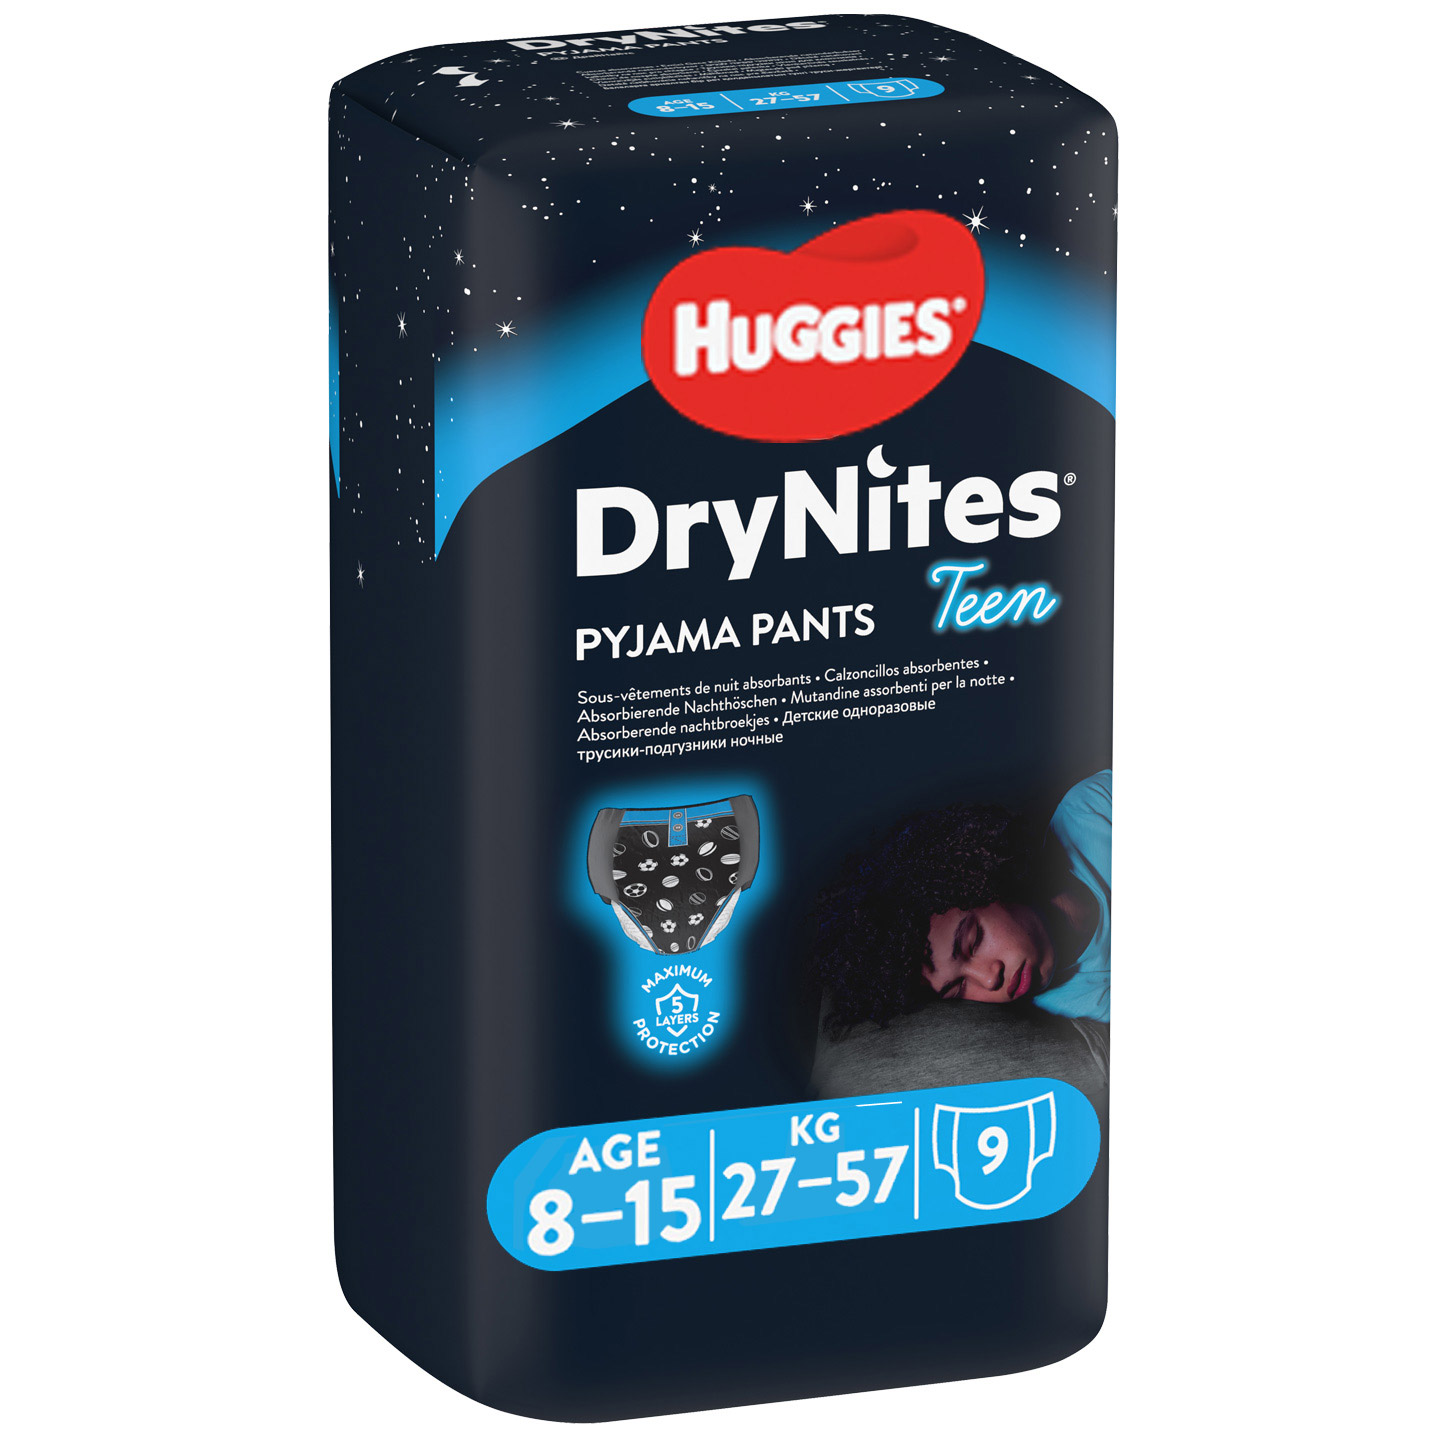 Scutece baieti DryNites, 8-15 ani, 27-57 kg, 9 bucati, Huggies    